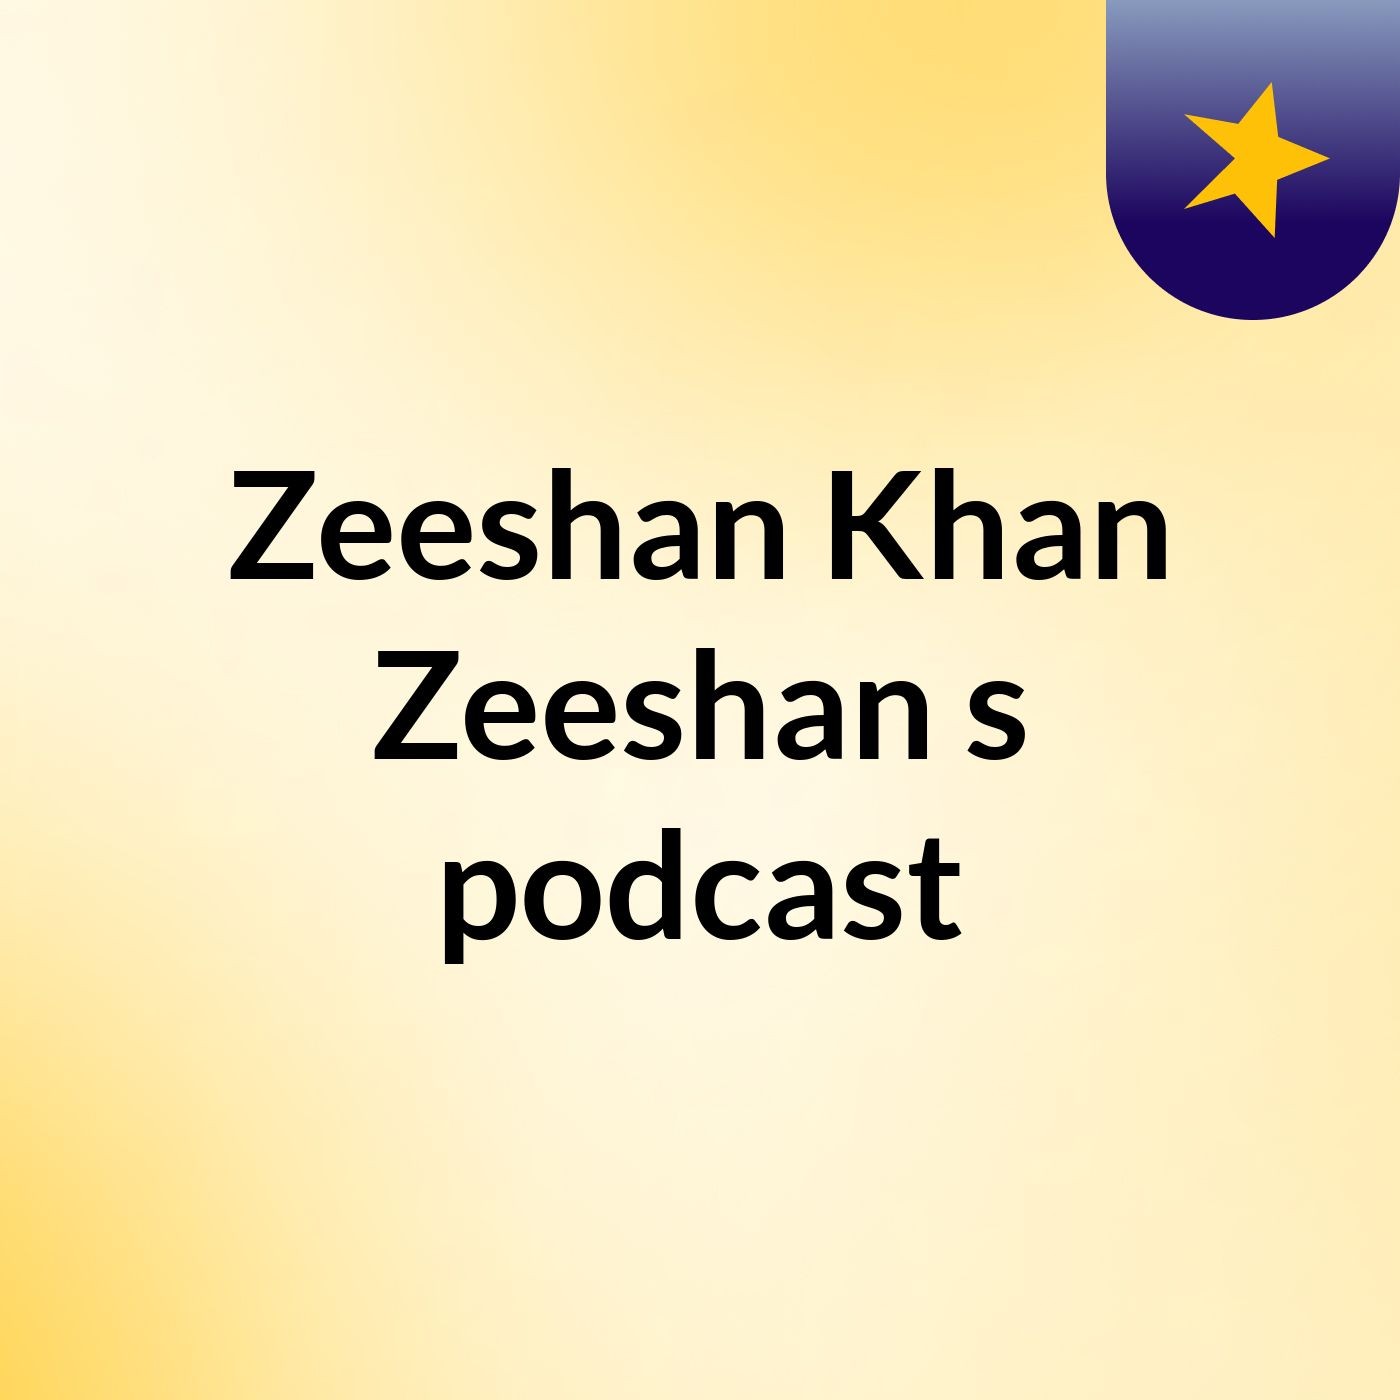 Episode 3 - Zeeshan Khan Zeeshan's podcast